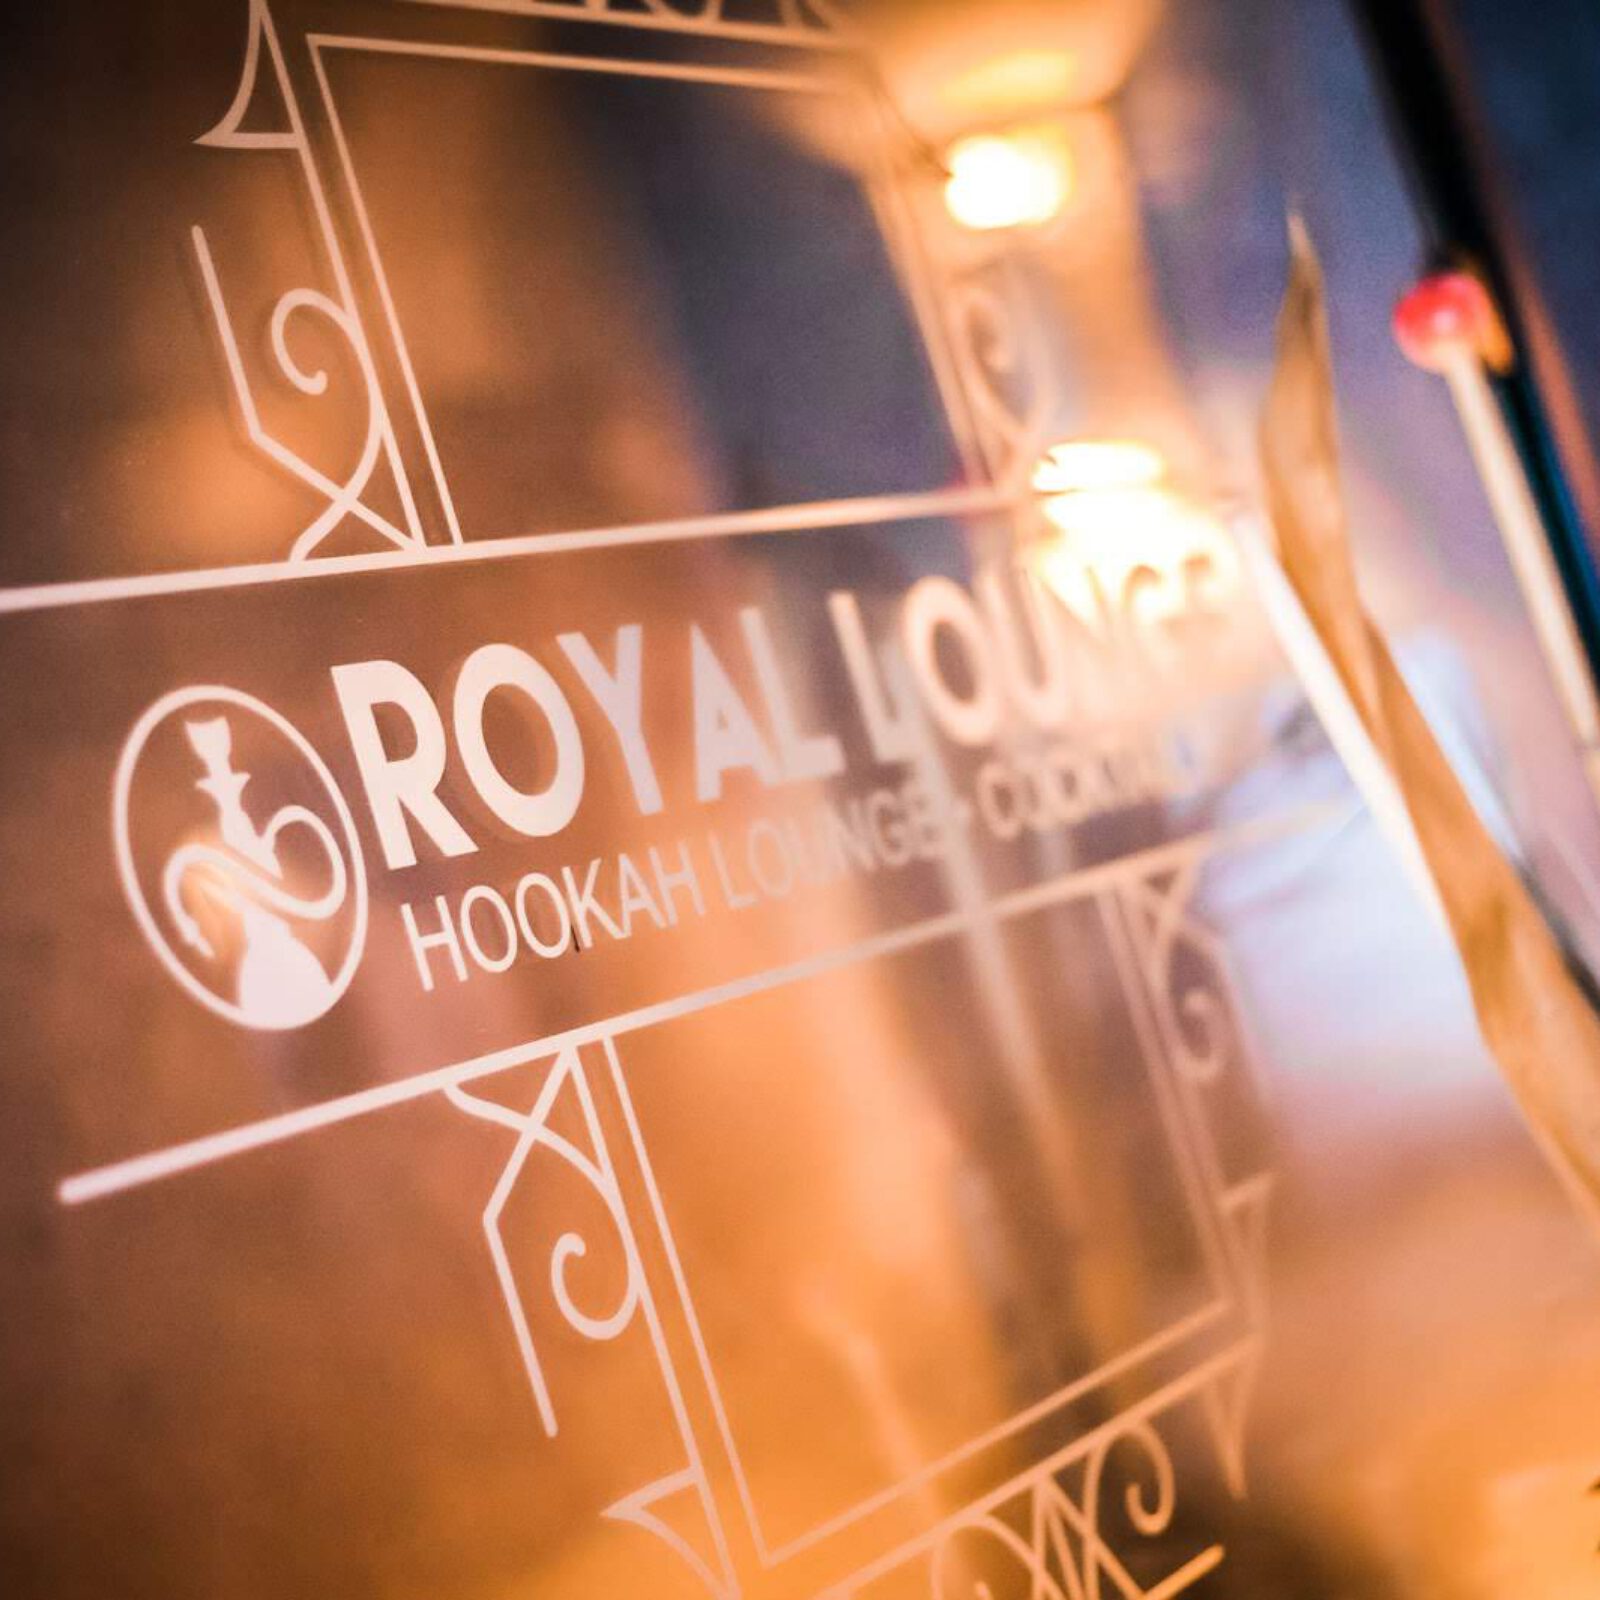 Royal Hookah Lounge Belgrade